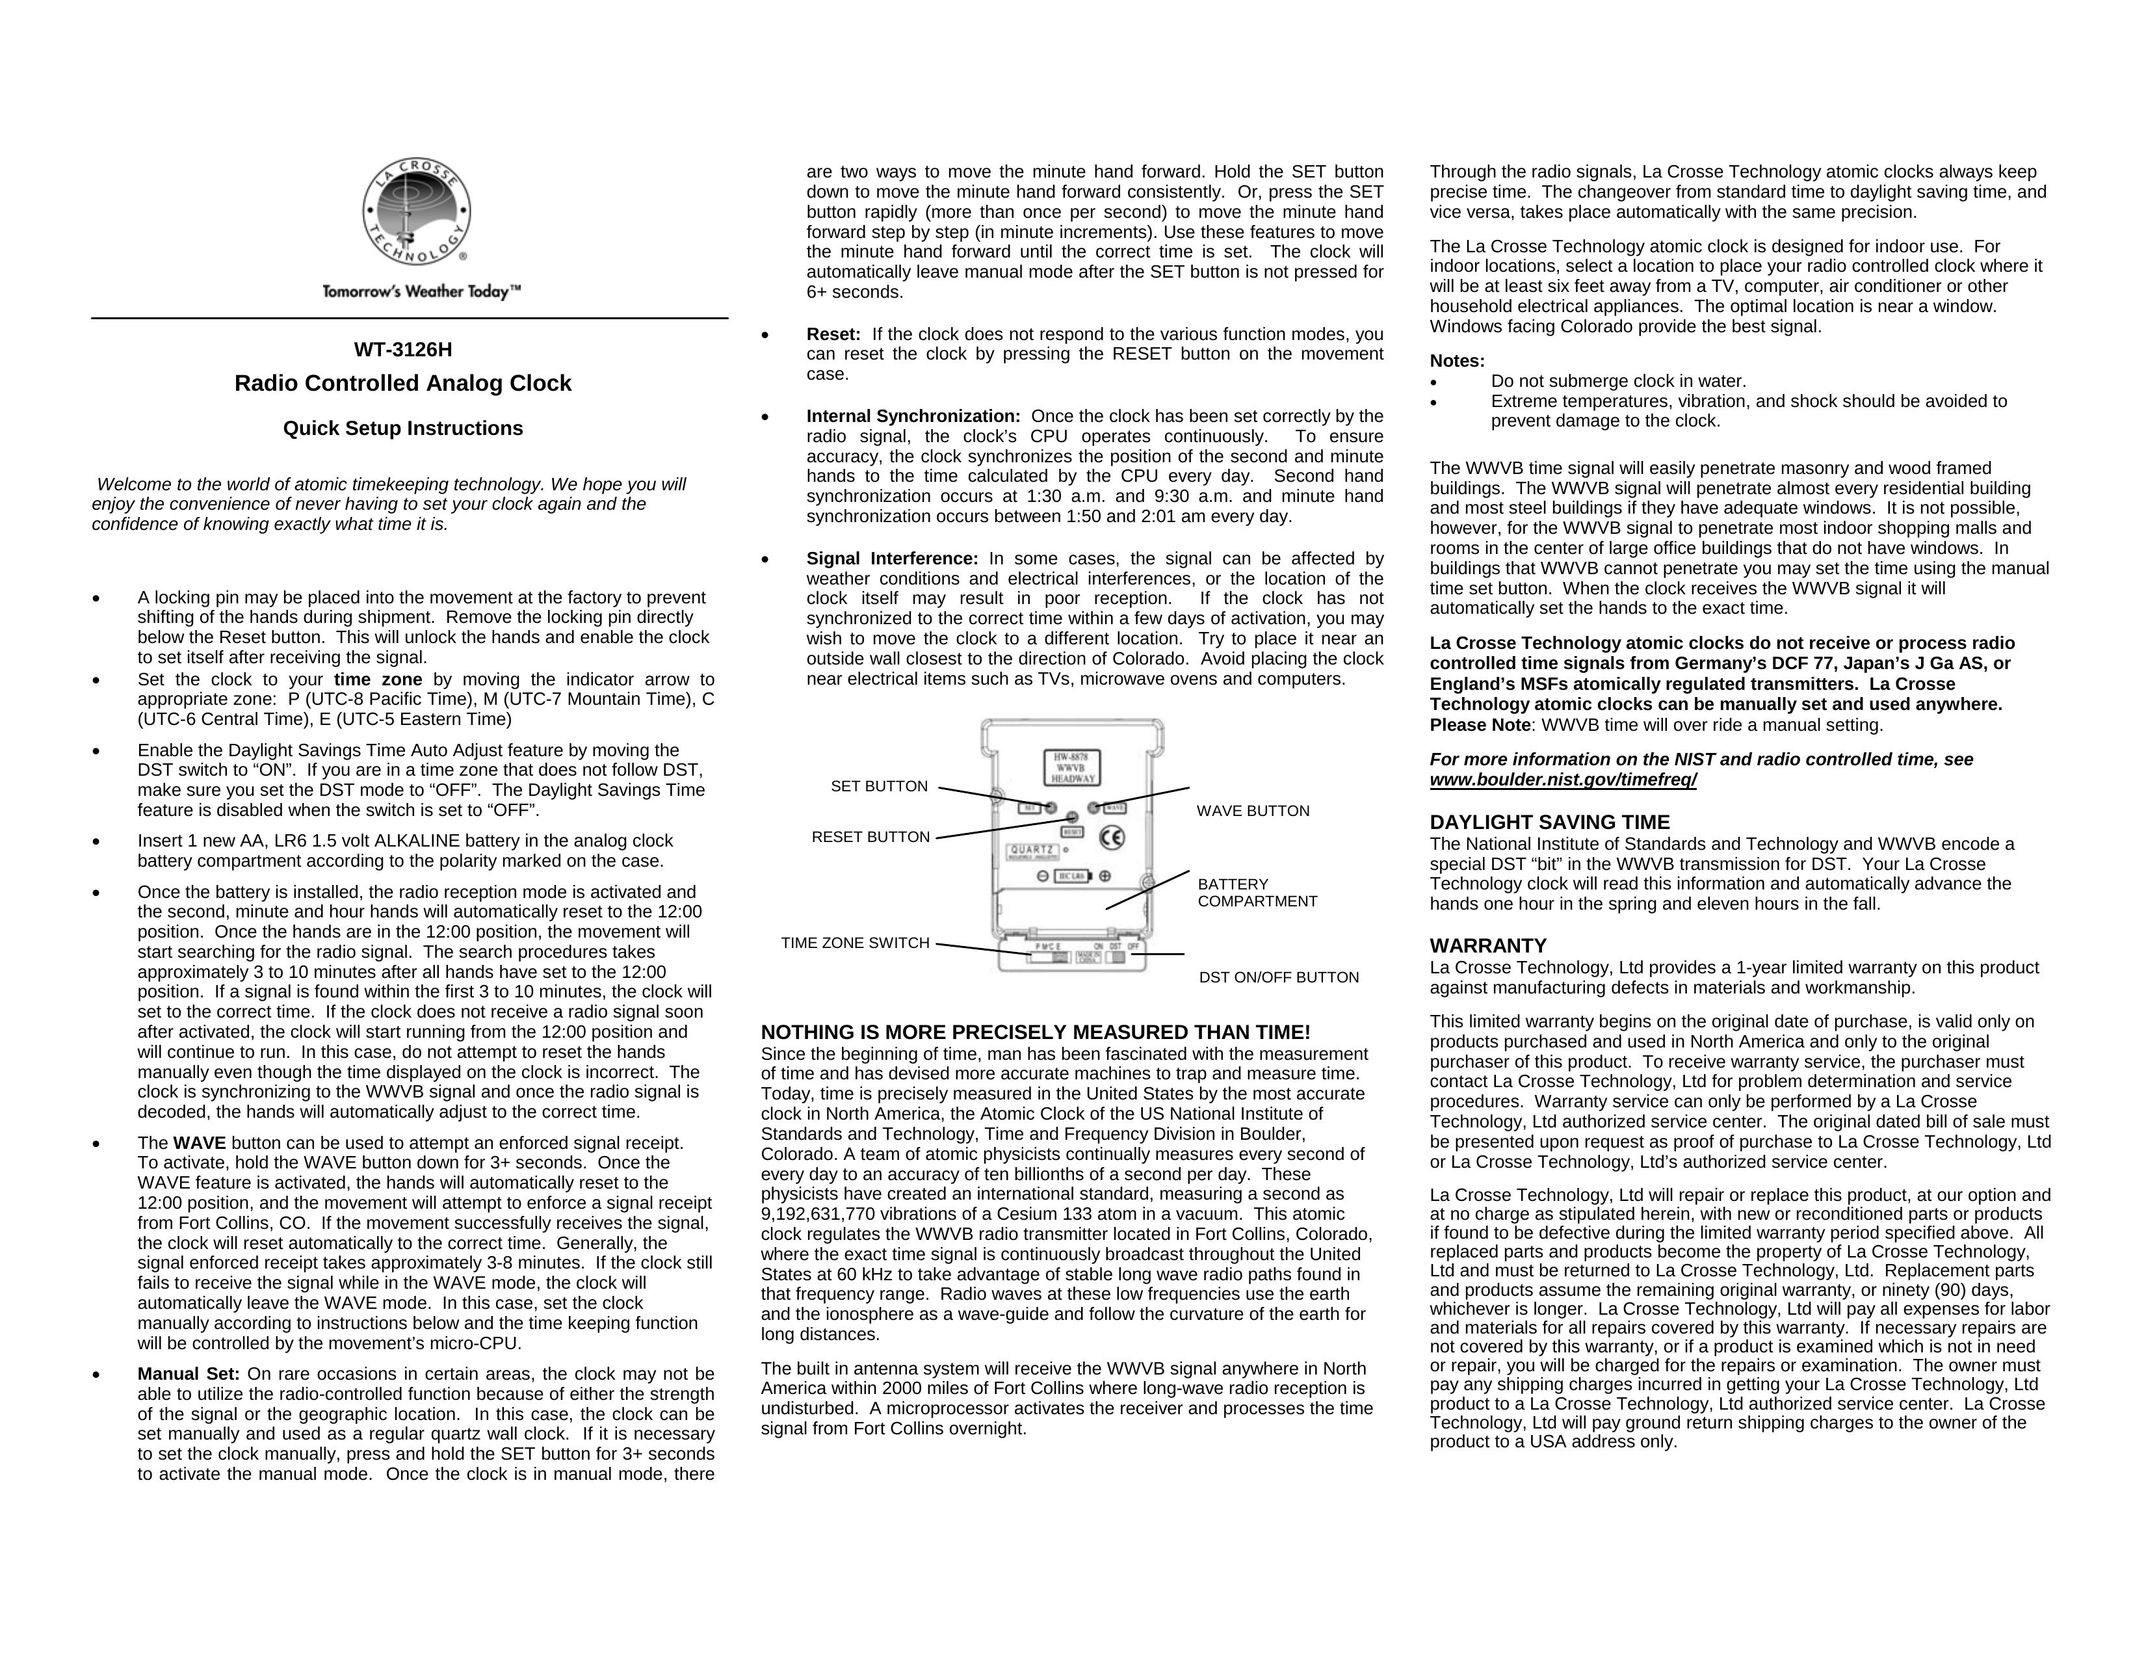 La Crosse Technology WT-3126H Clock User Manual